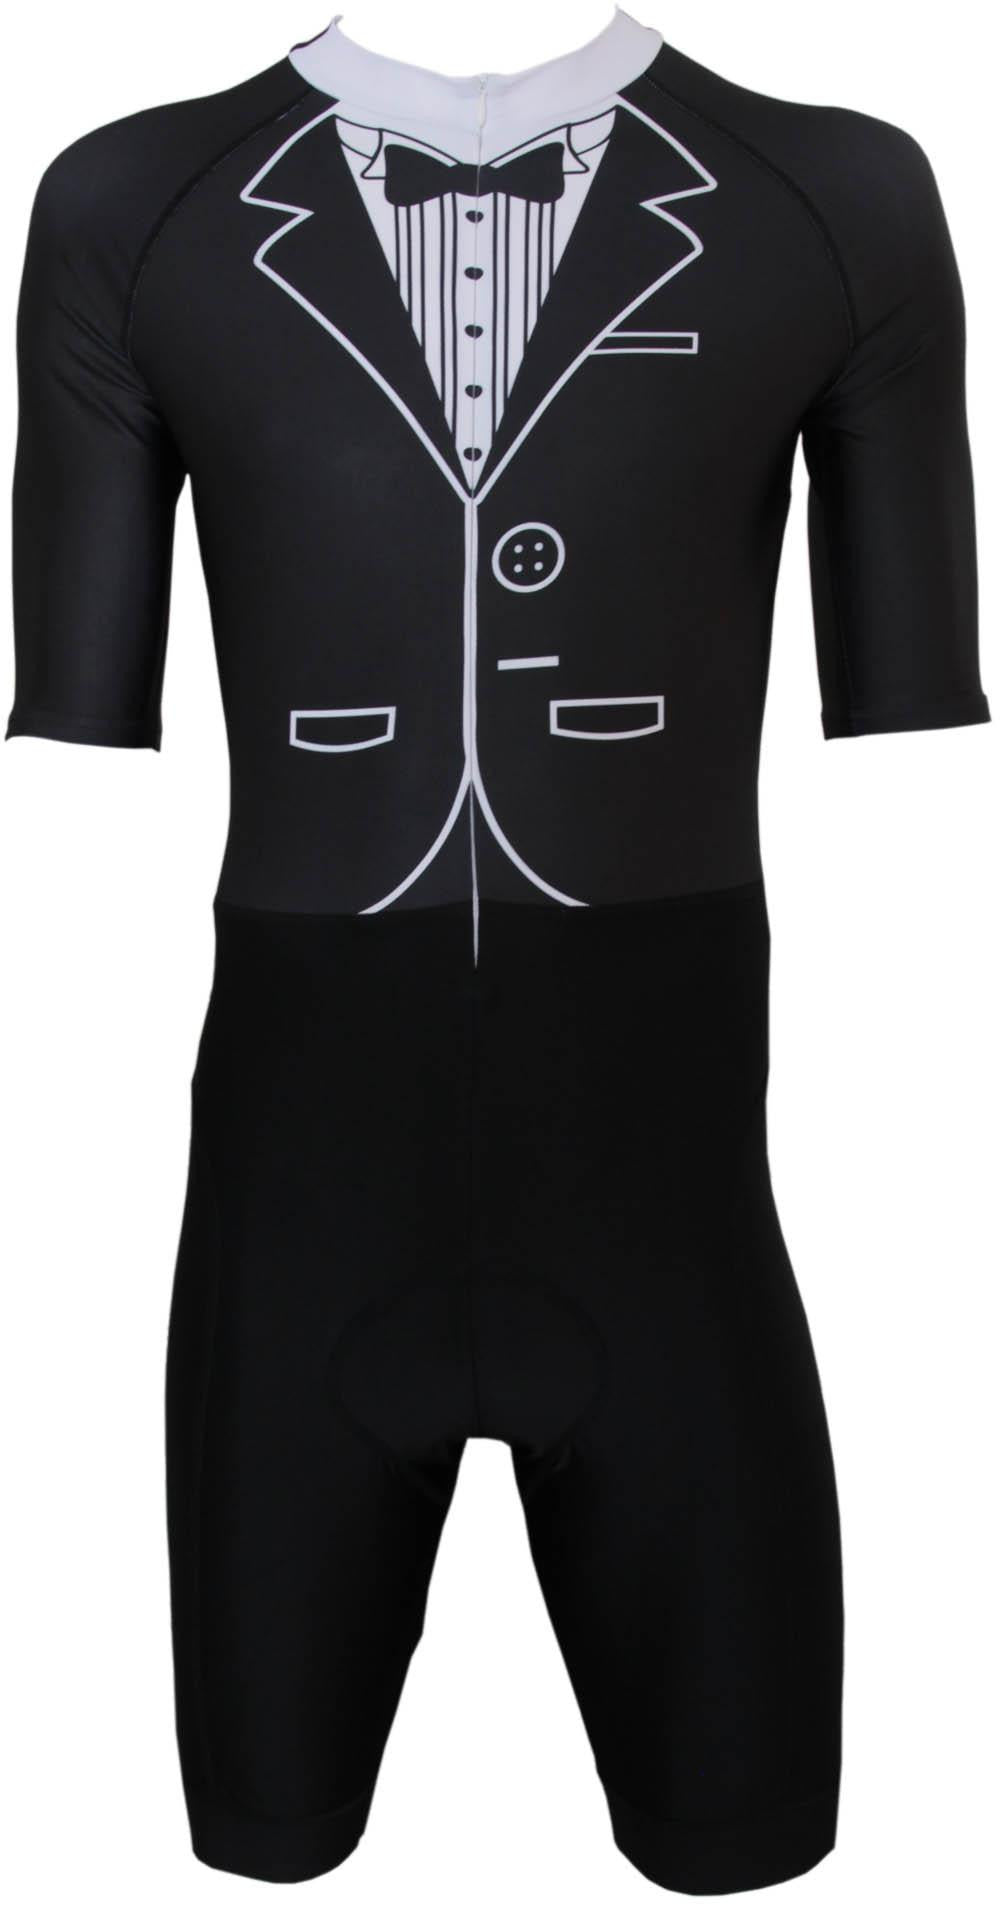 Tuxedo Short Sleeve Cycling Skinsuit corbah